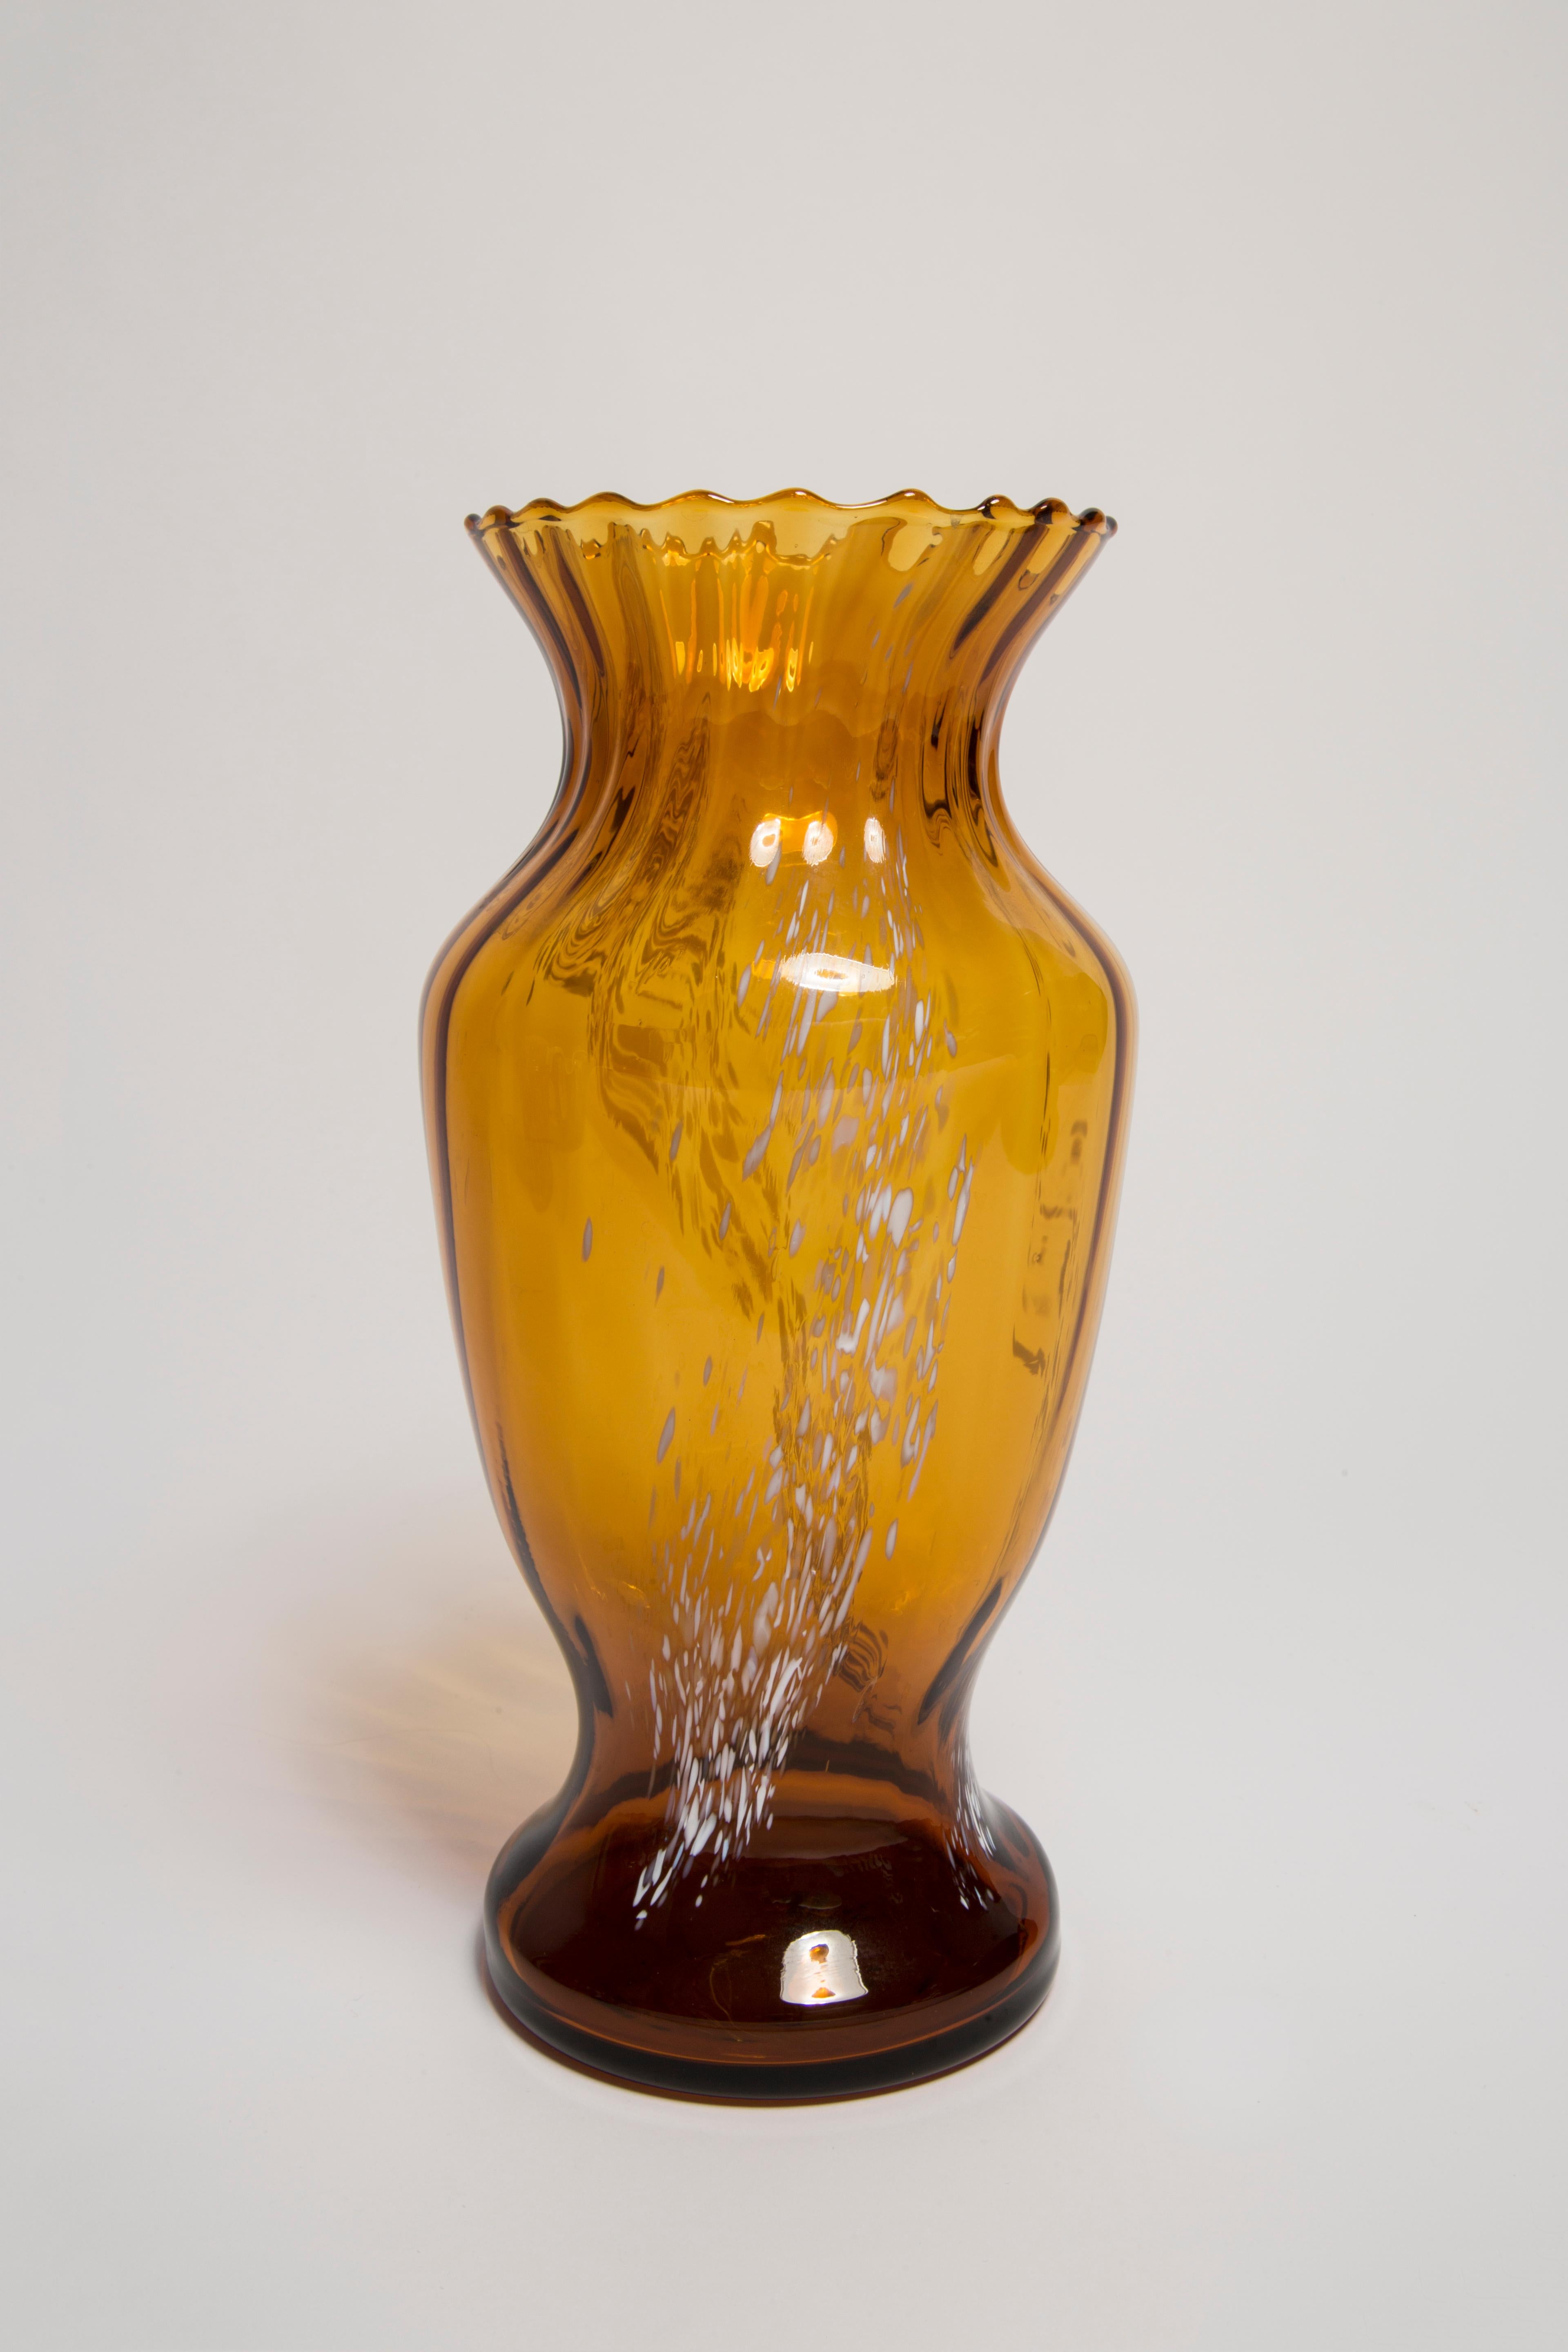 VASE “Frill”
Author: Decorative Glassworks 